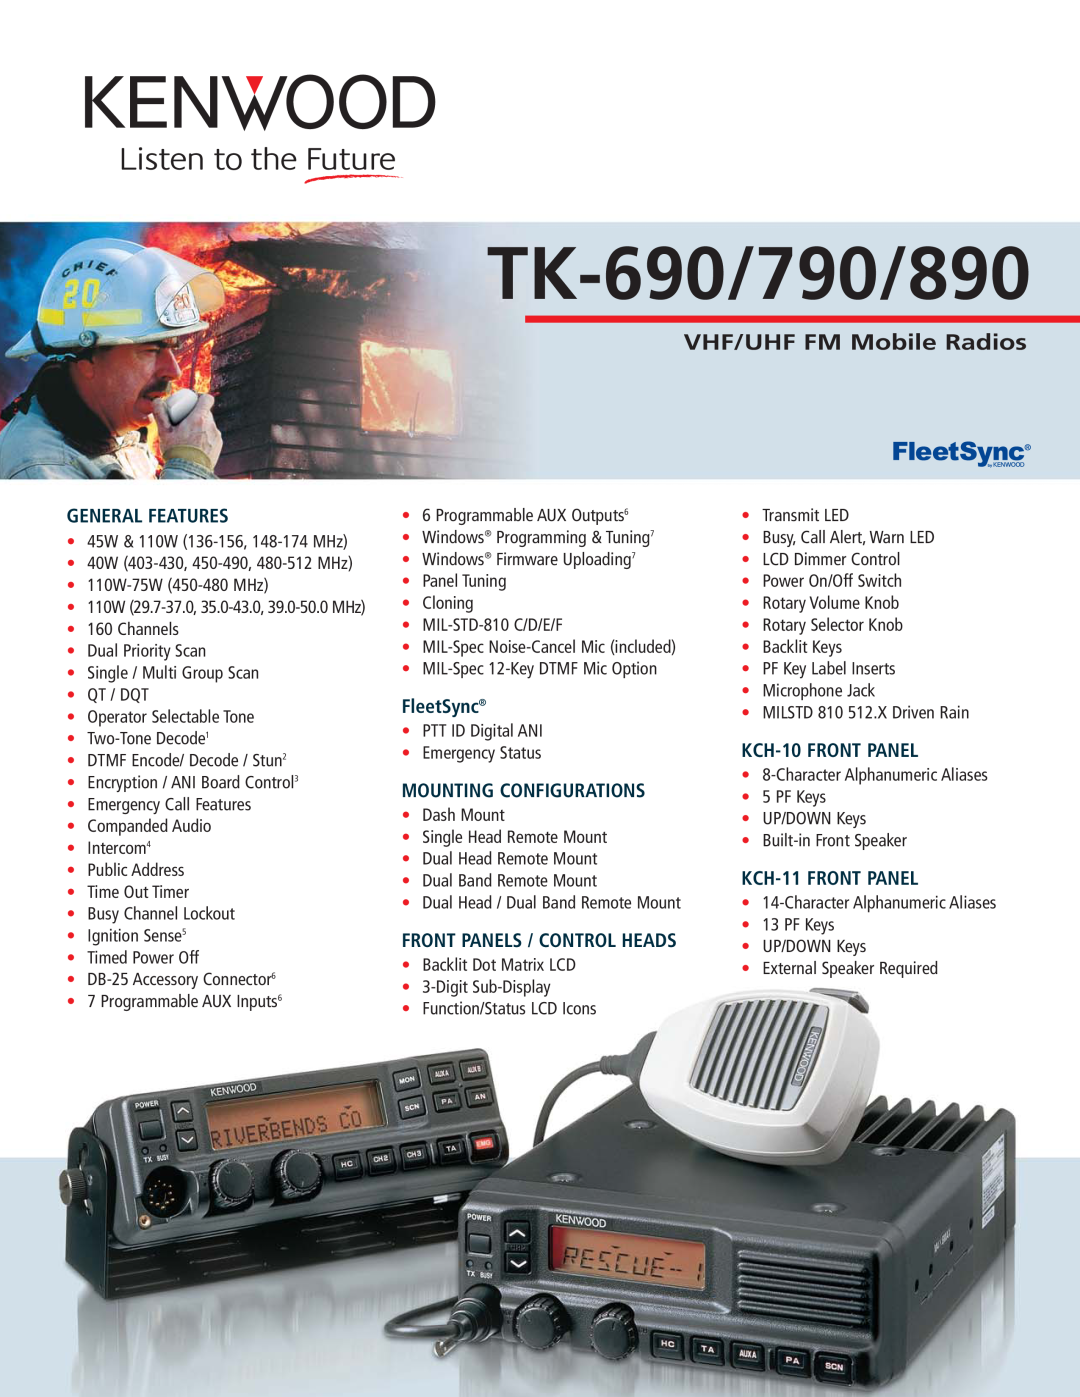 Kenwood TK-890 manual TK-690/790/890, VHF/UHF FM Mobile Radios, General Features, FleetSync, Mounting Configurations 